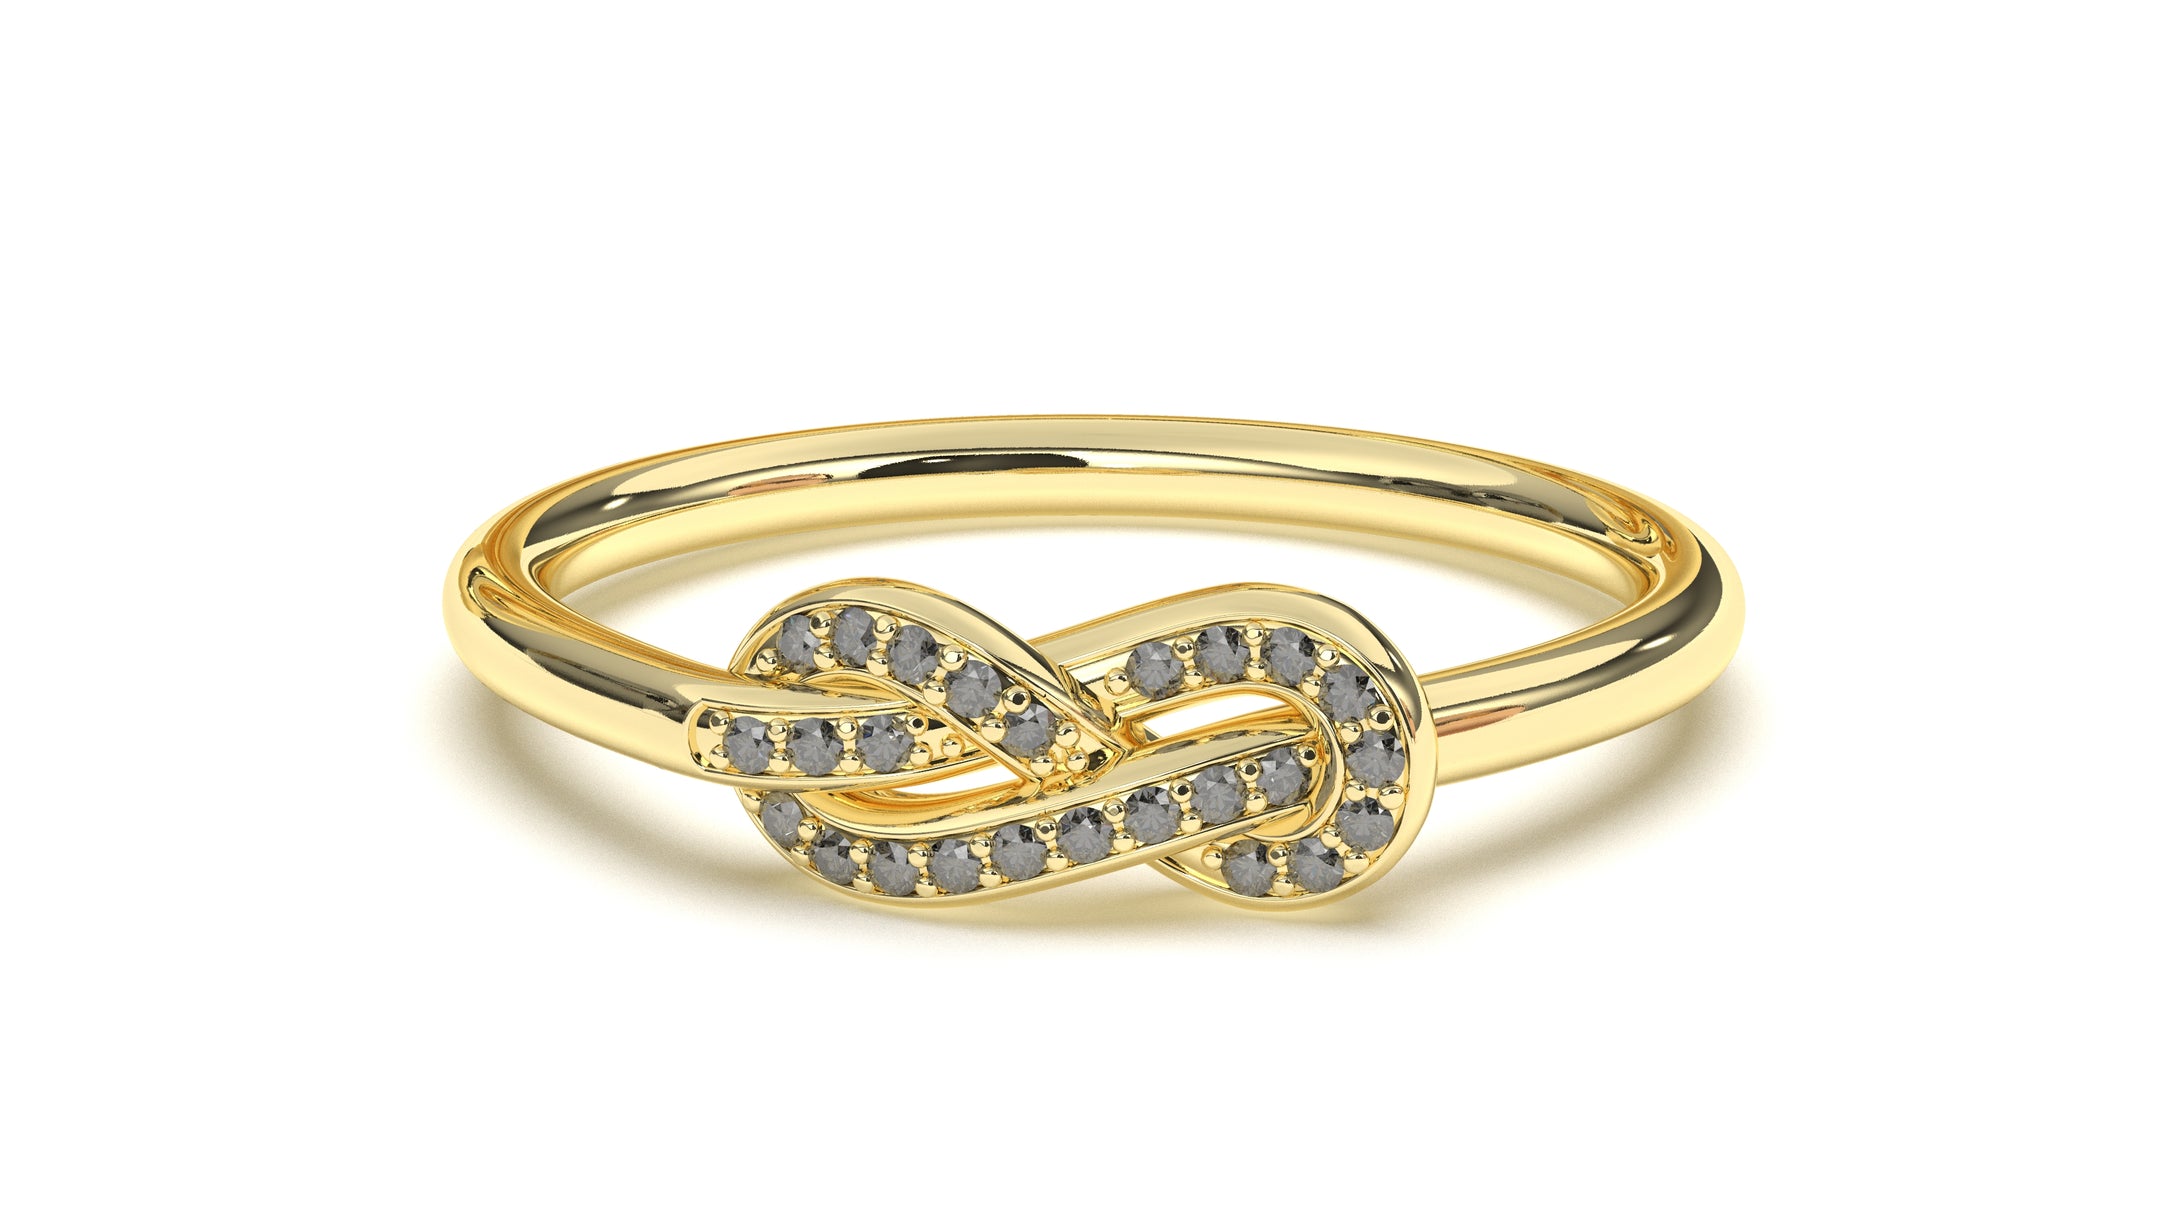 Braid Style Ring Encrusted with Round Black Diamonds | Knots Twist I